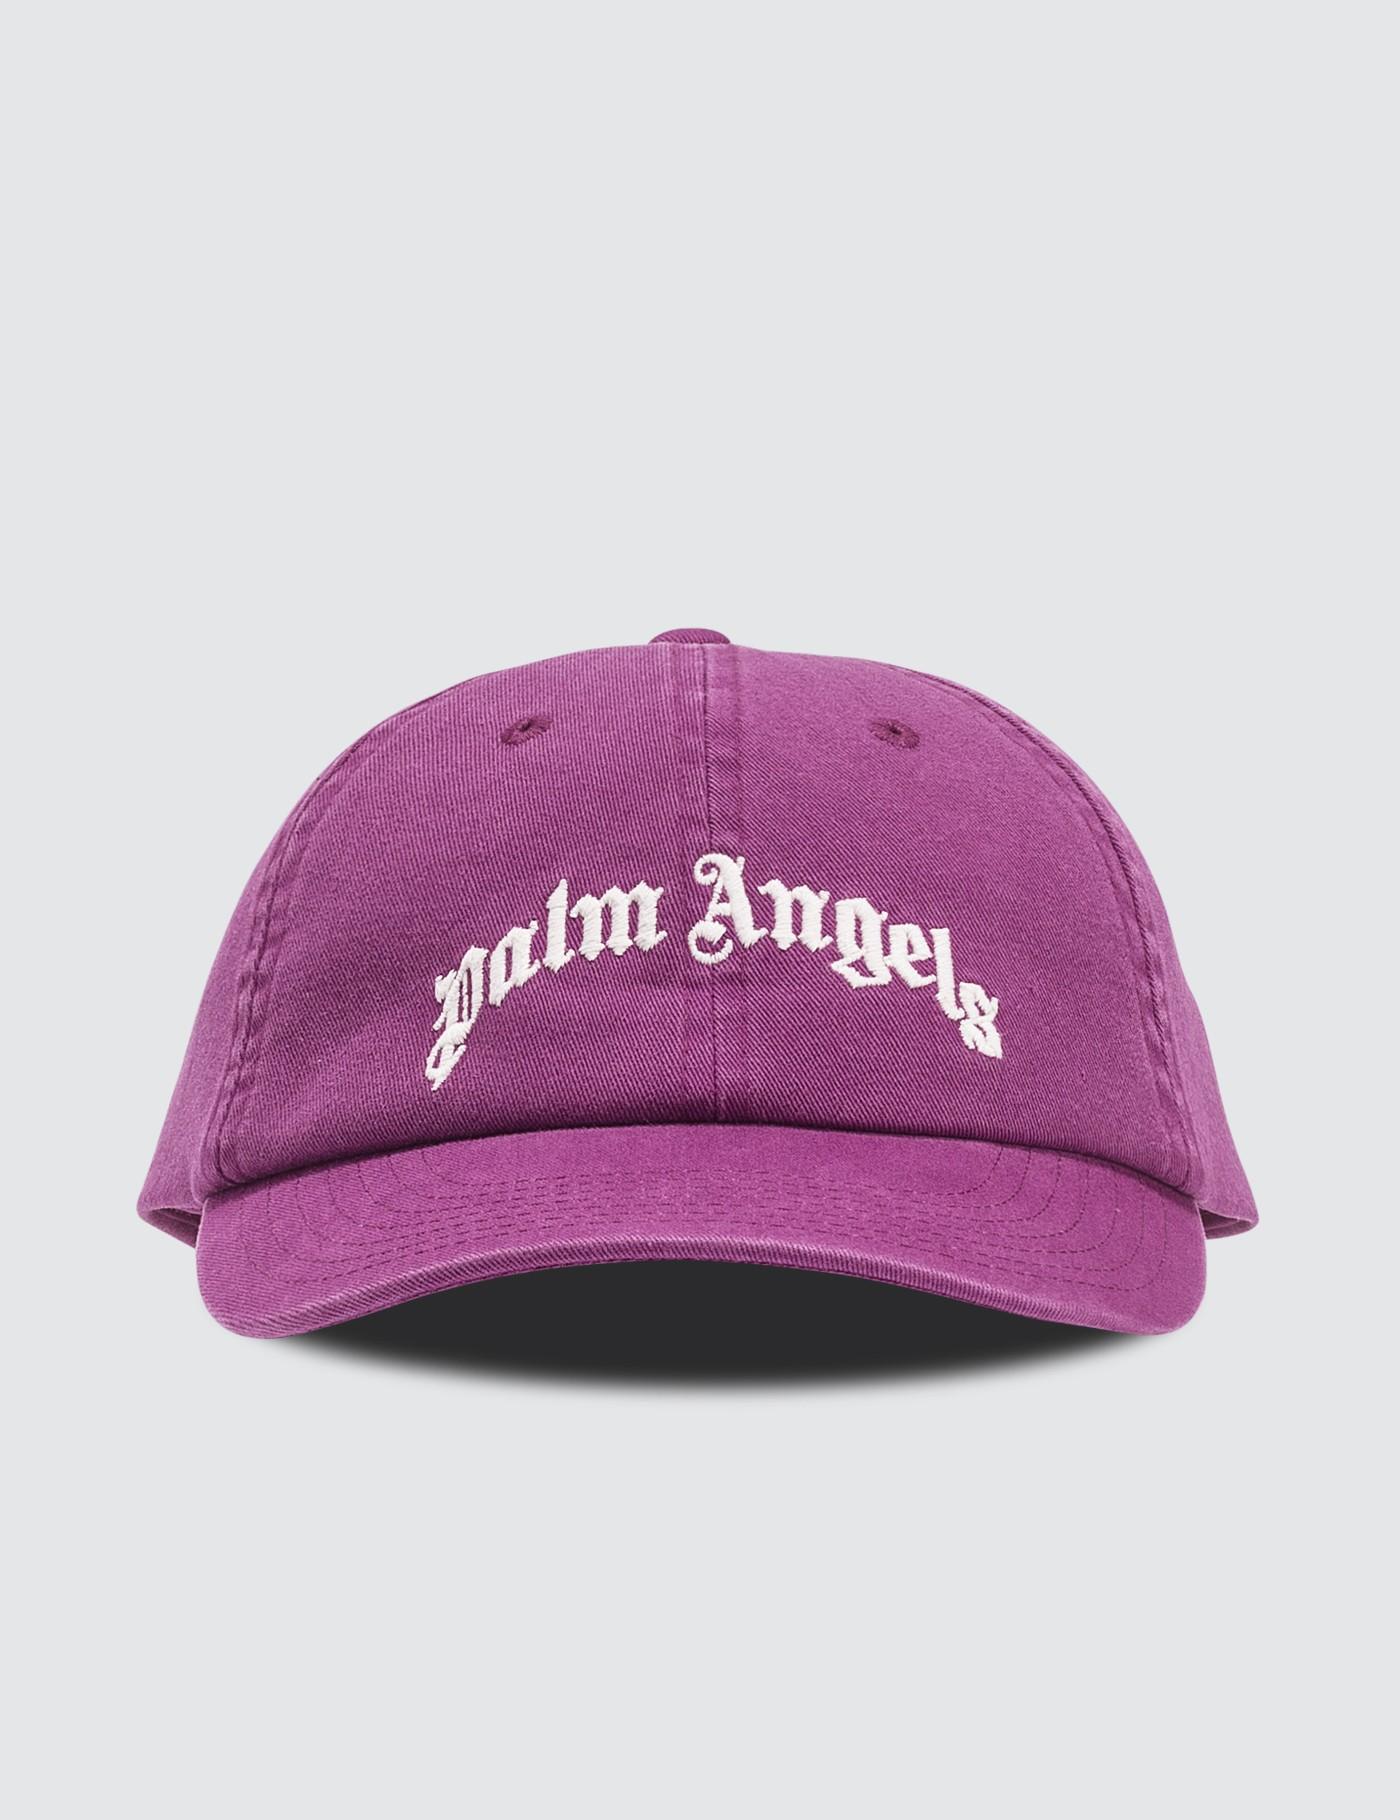 Palm Angels Cotton Arch Logo Cap in Purple for Men - Lyst